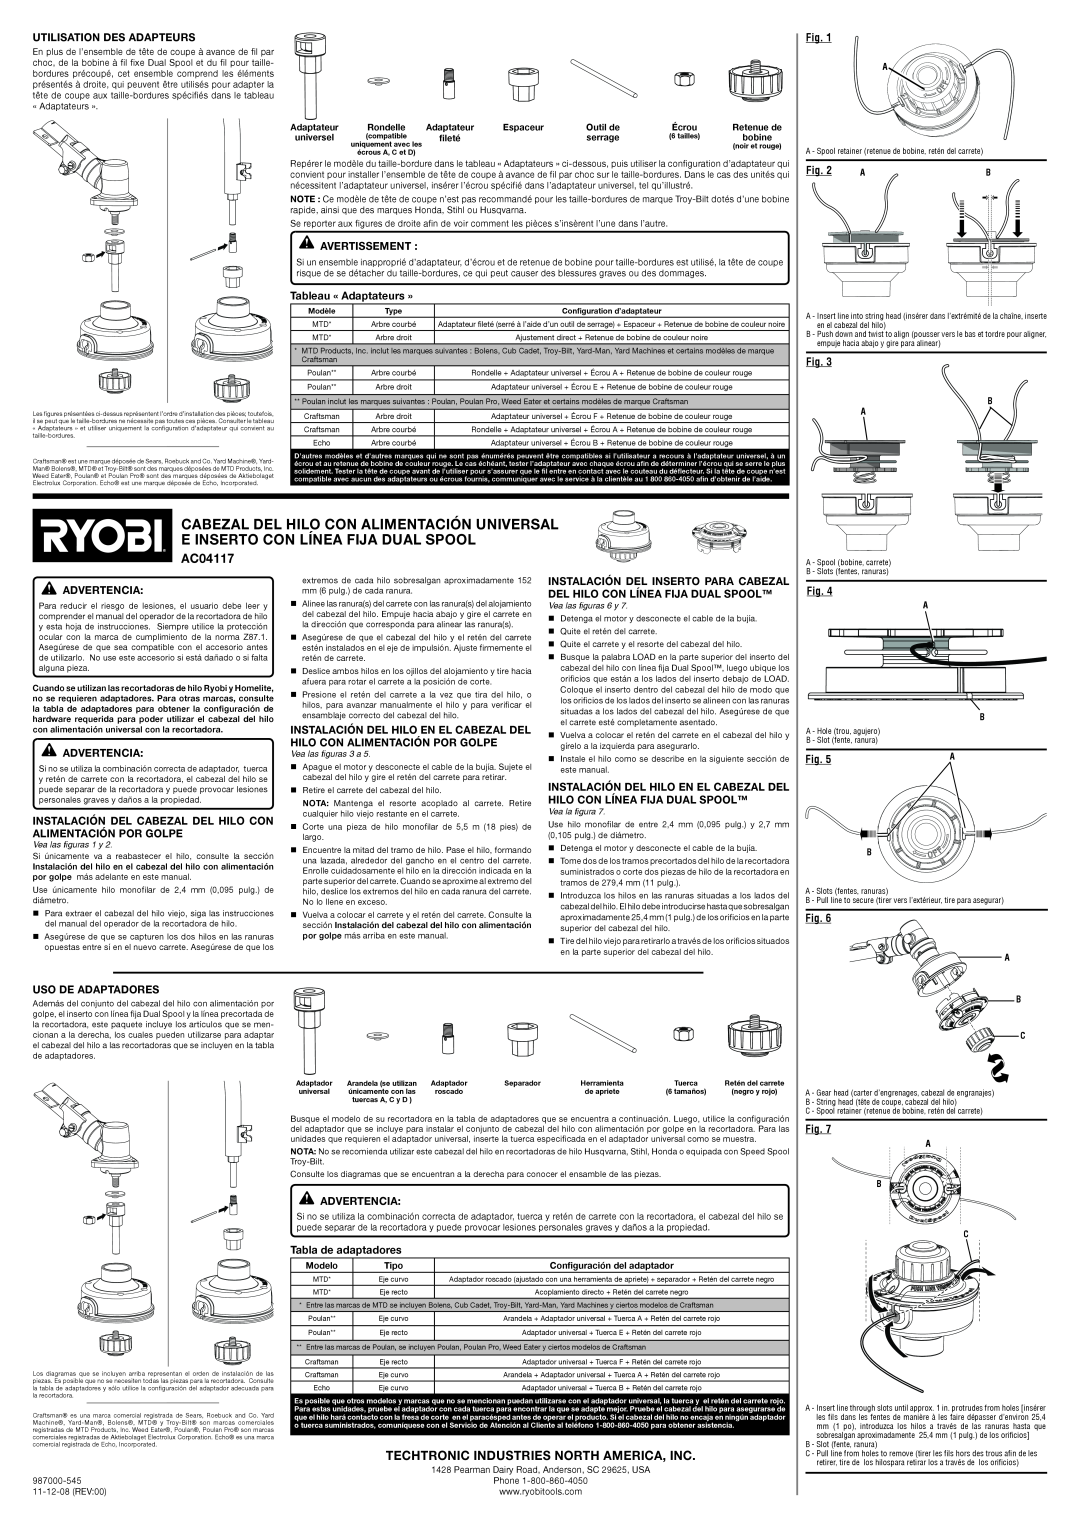 Ryobi AC04117 Techtronic Industries North America, Inc, Vea las figuras 1 y, Vea las figuras 3 a, Vea las figuras 6 y 